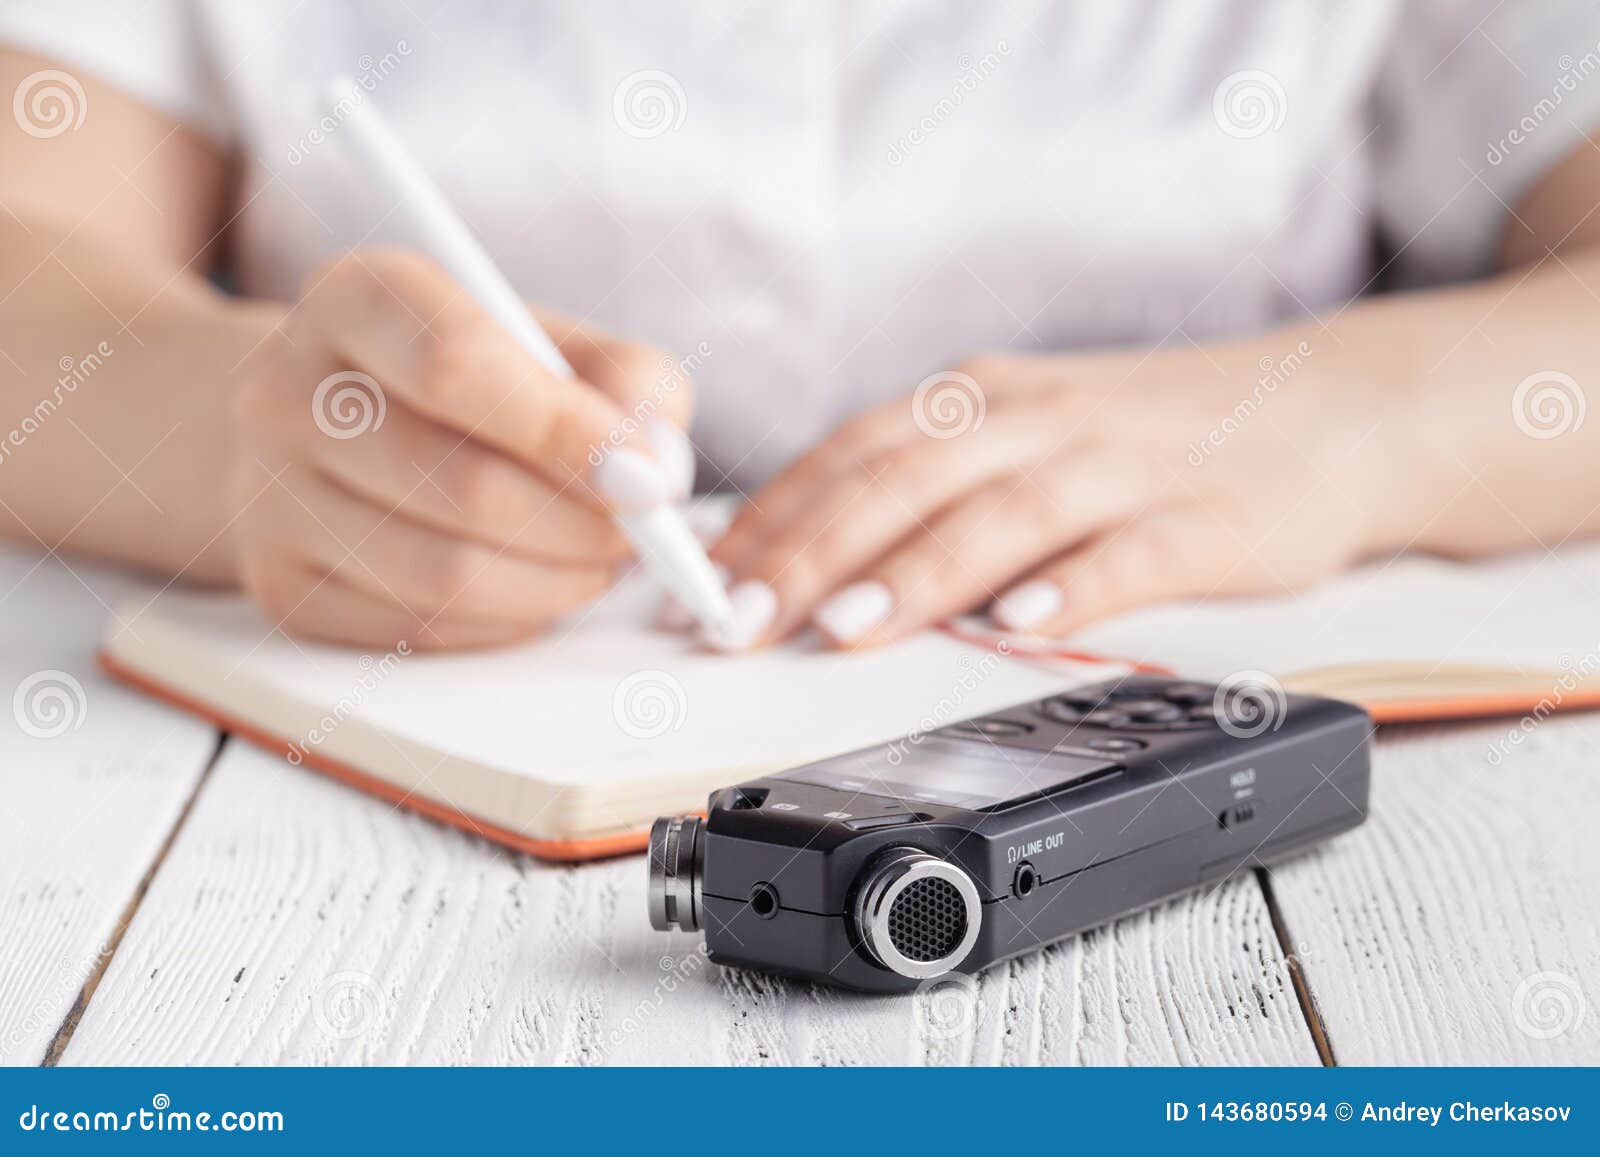 speech recorder writer